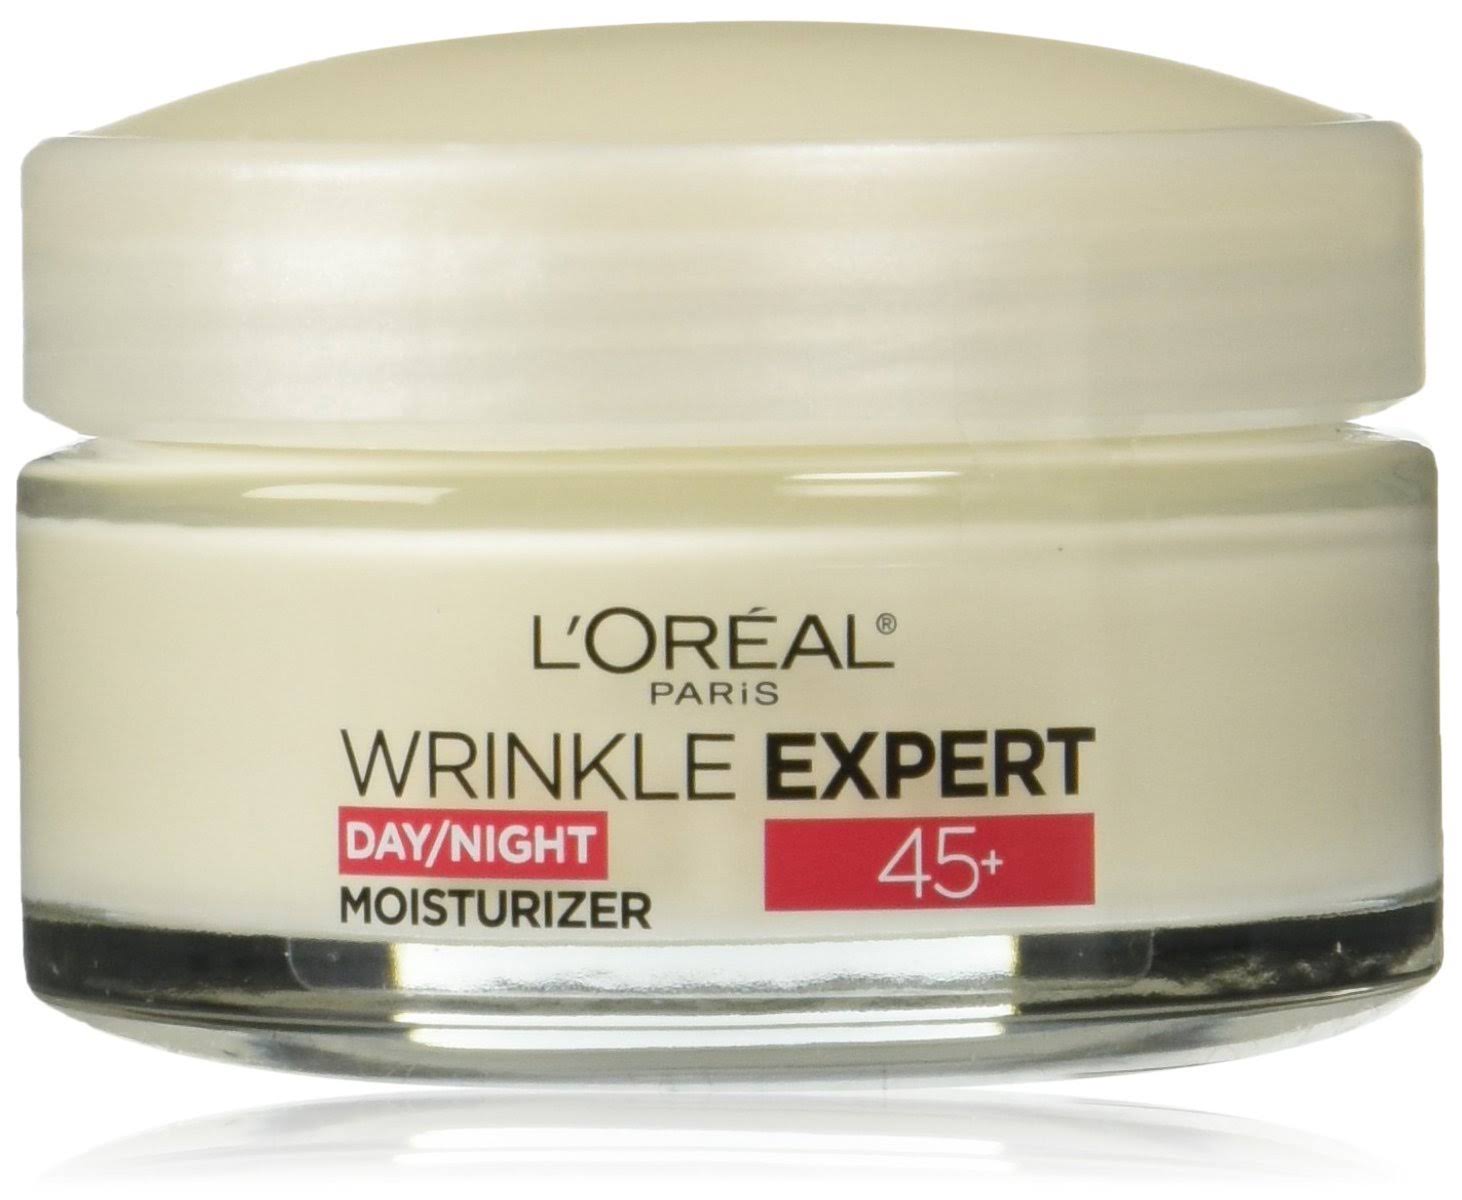 L'Oréal Paris Wrinkle Expert 45 Day Night Moisturizer - 1.7oz